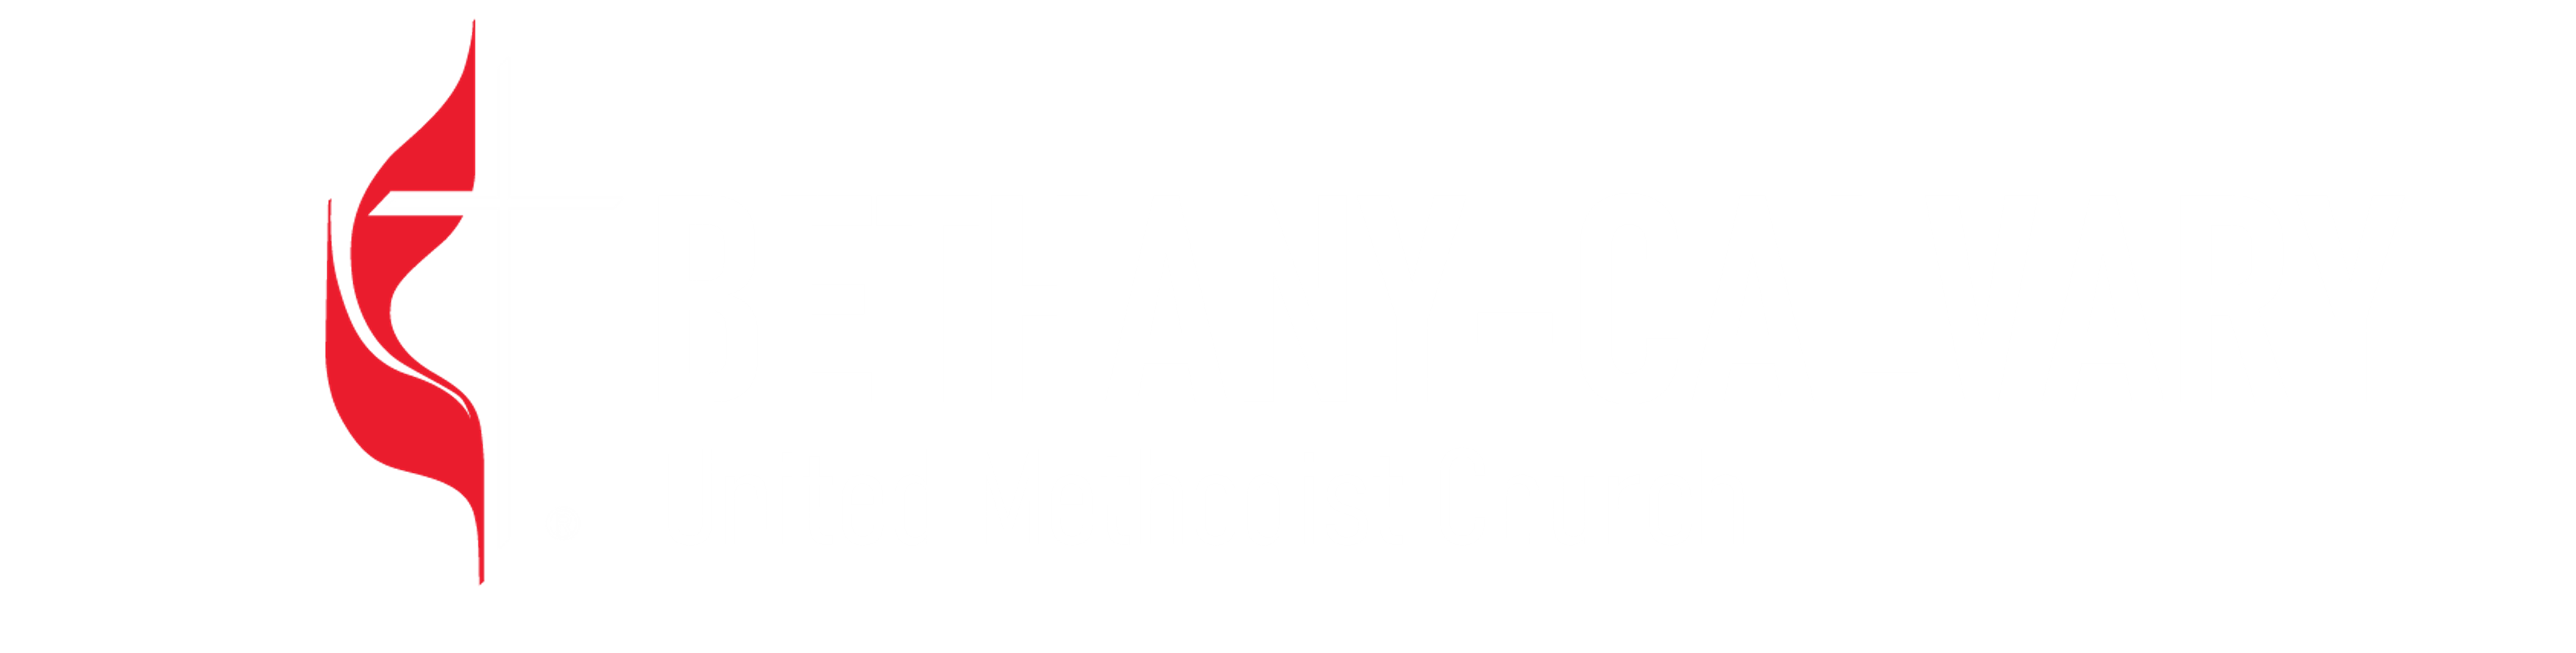 Bethany-Calvary United Methodist Church